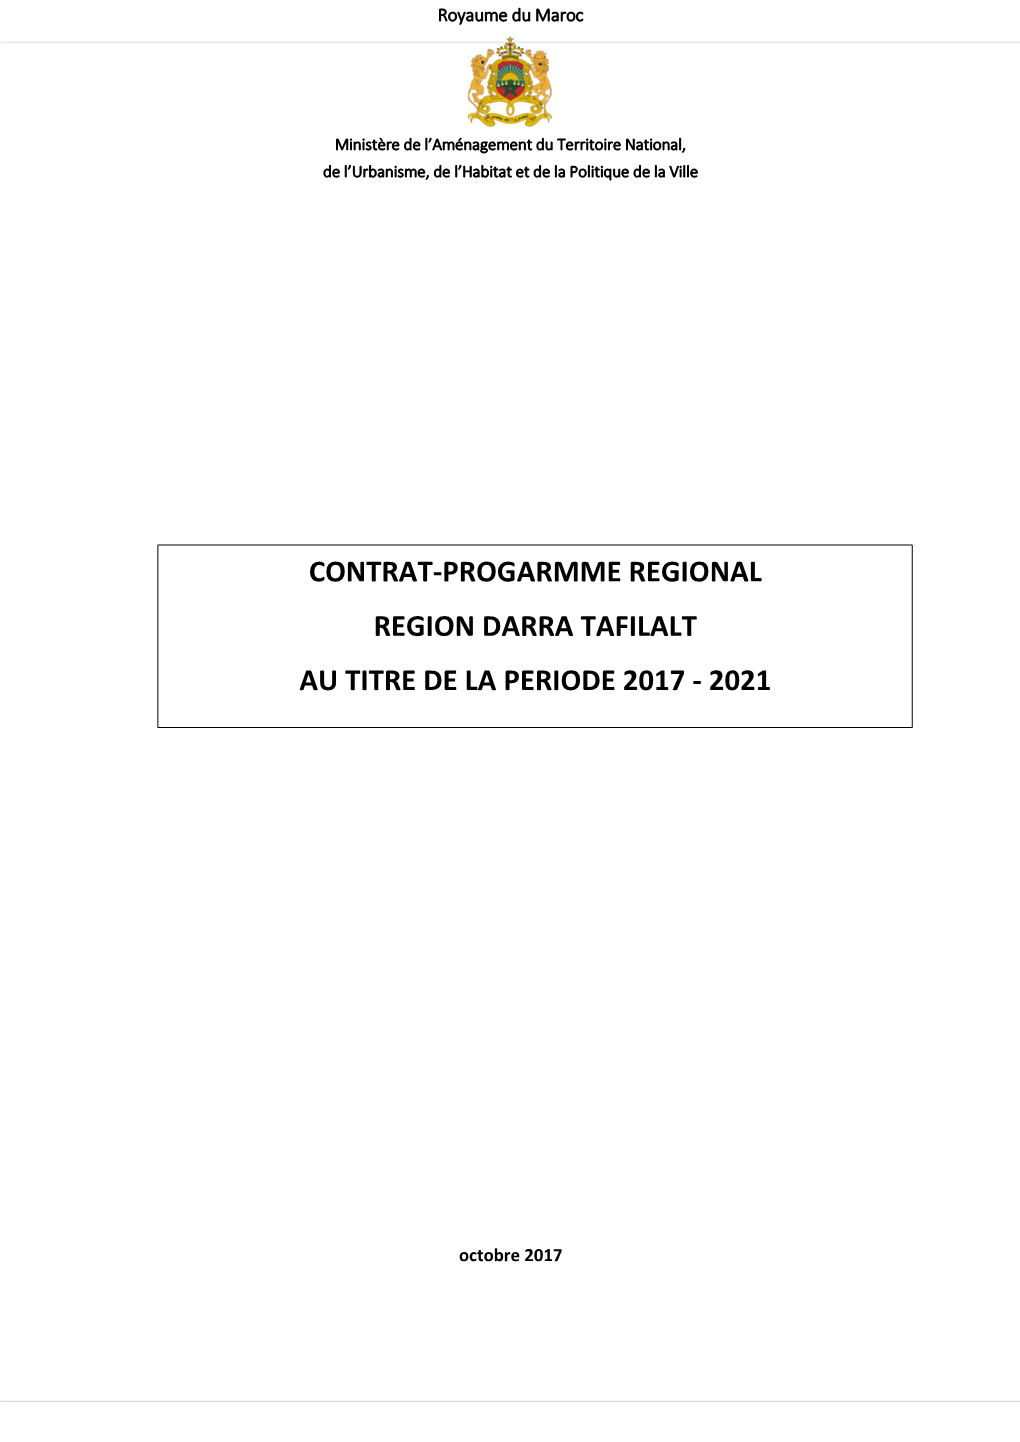 Contrat-Progarmme Regional Region Darra Tafilalt Au Titre De La Periode 2017 - 2021